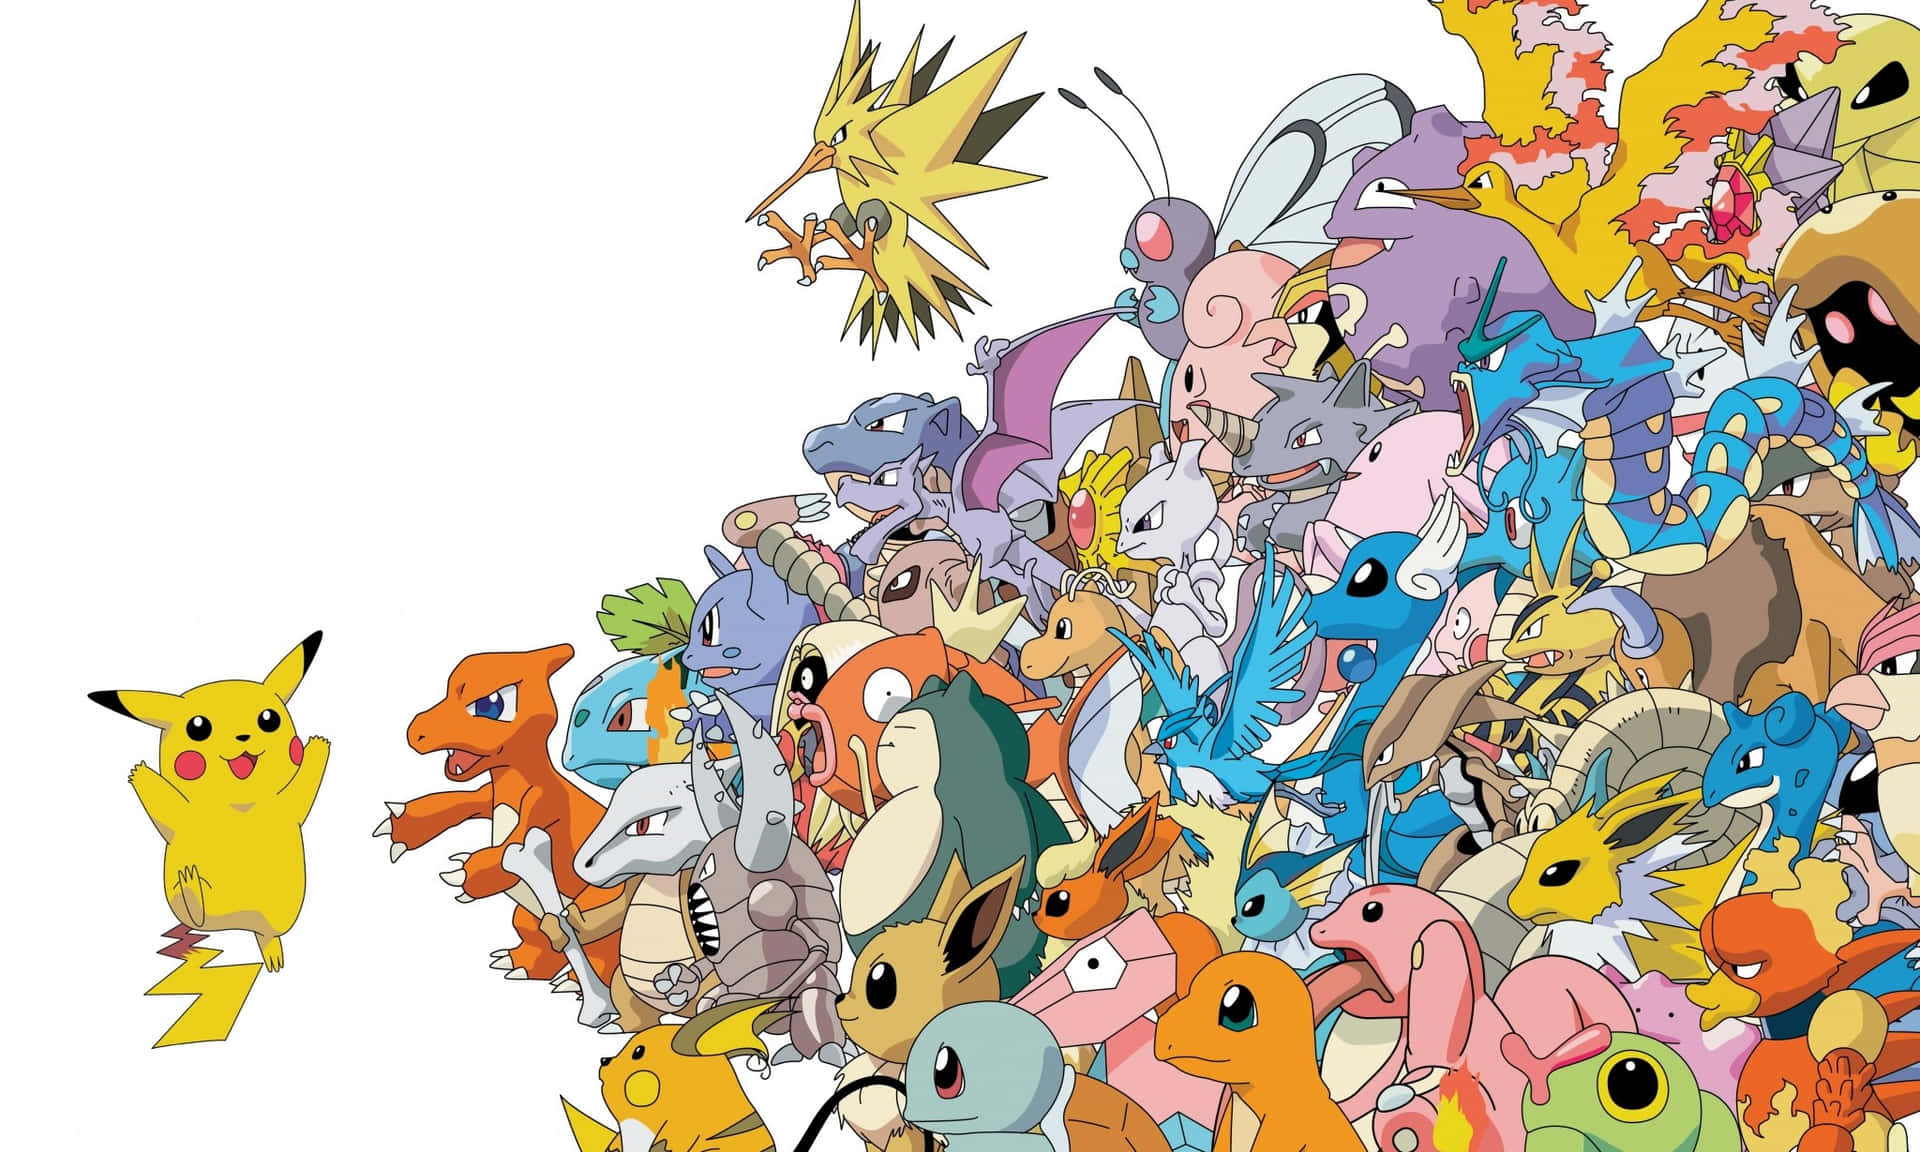 Nostalgiskbaggrund Med Første Generation Pokémon.